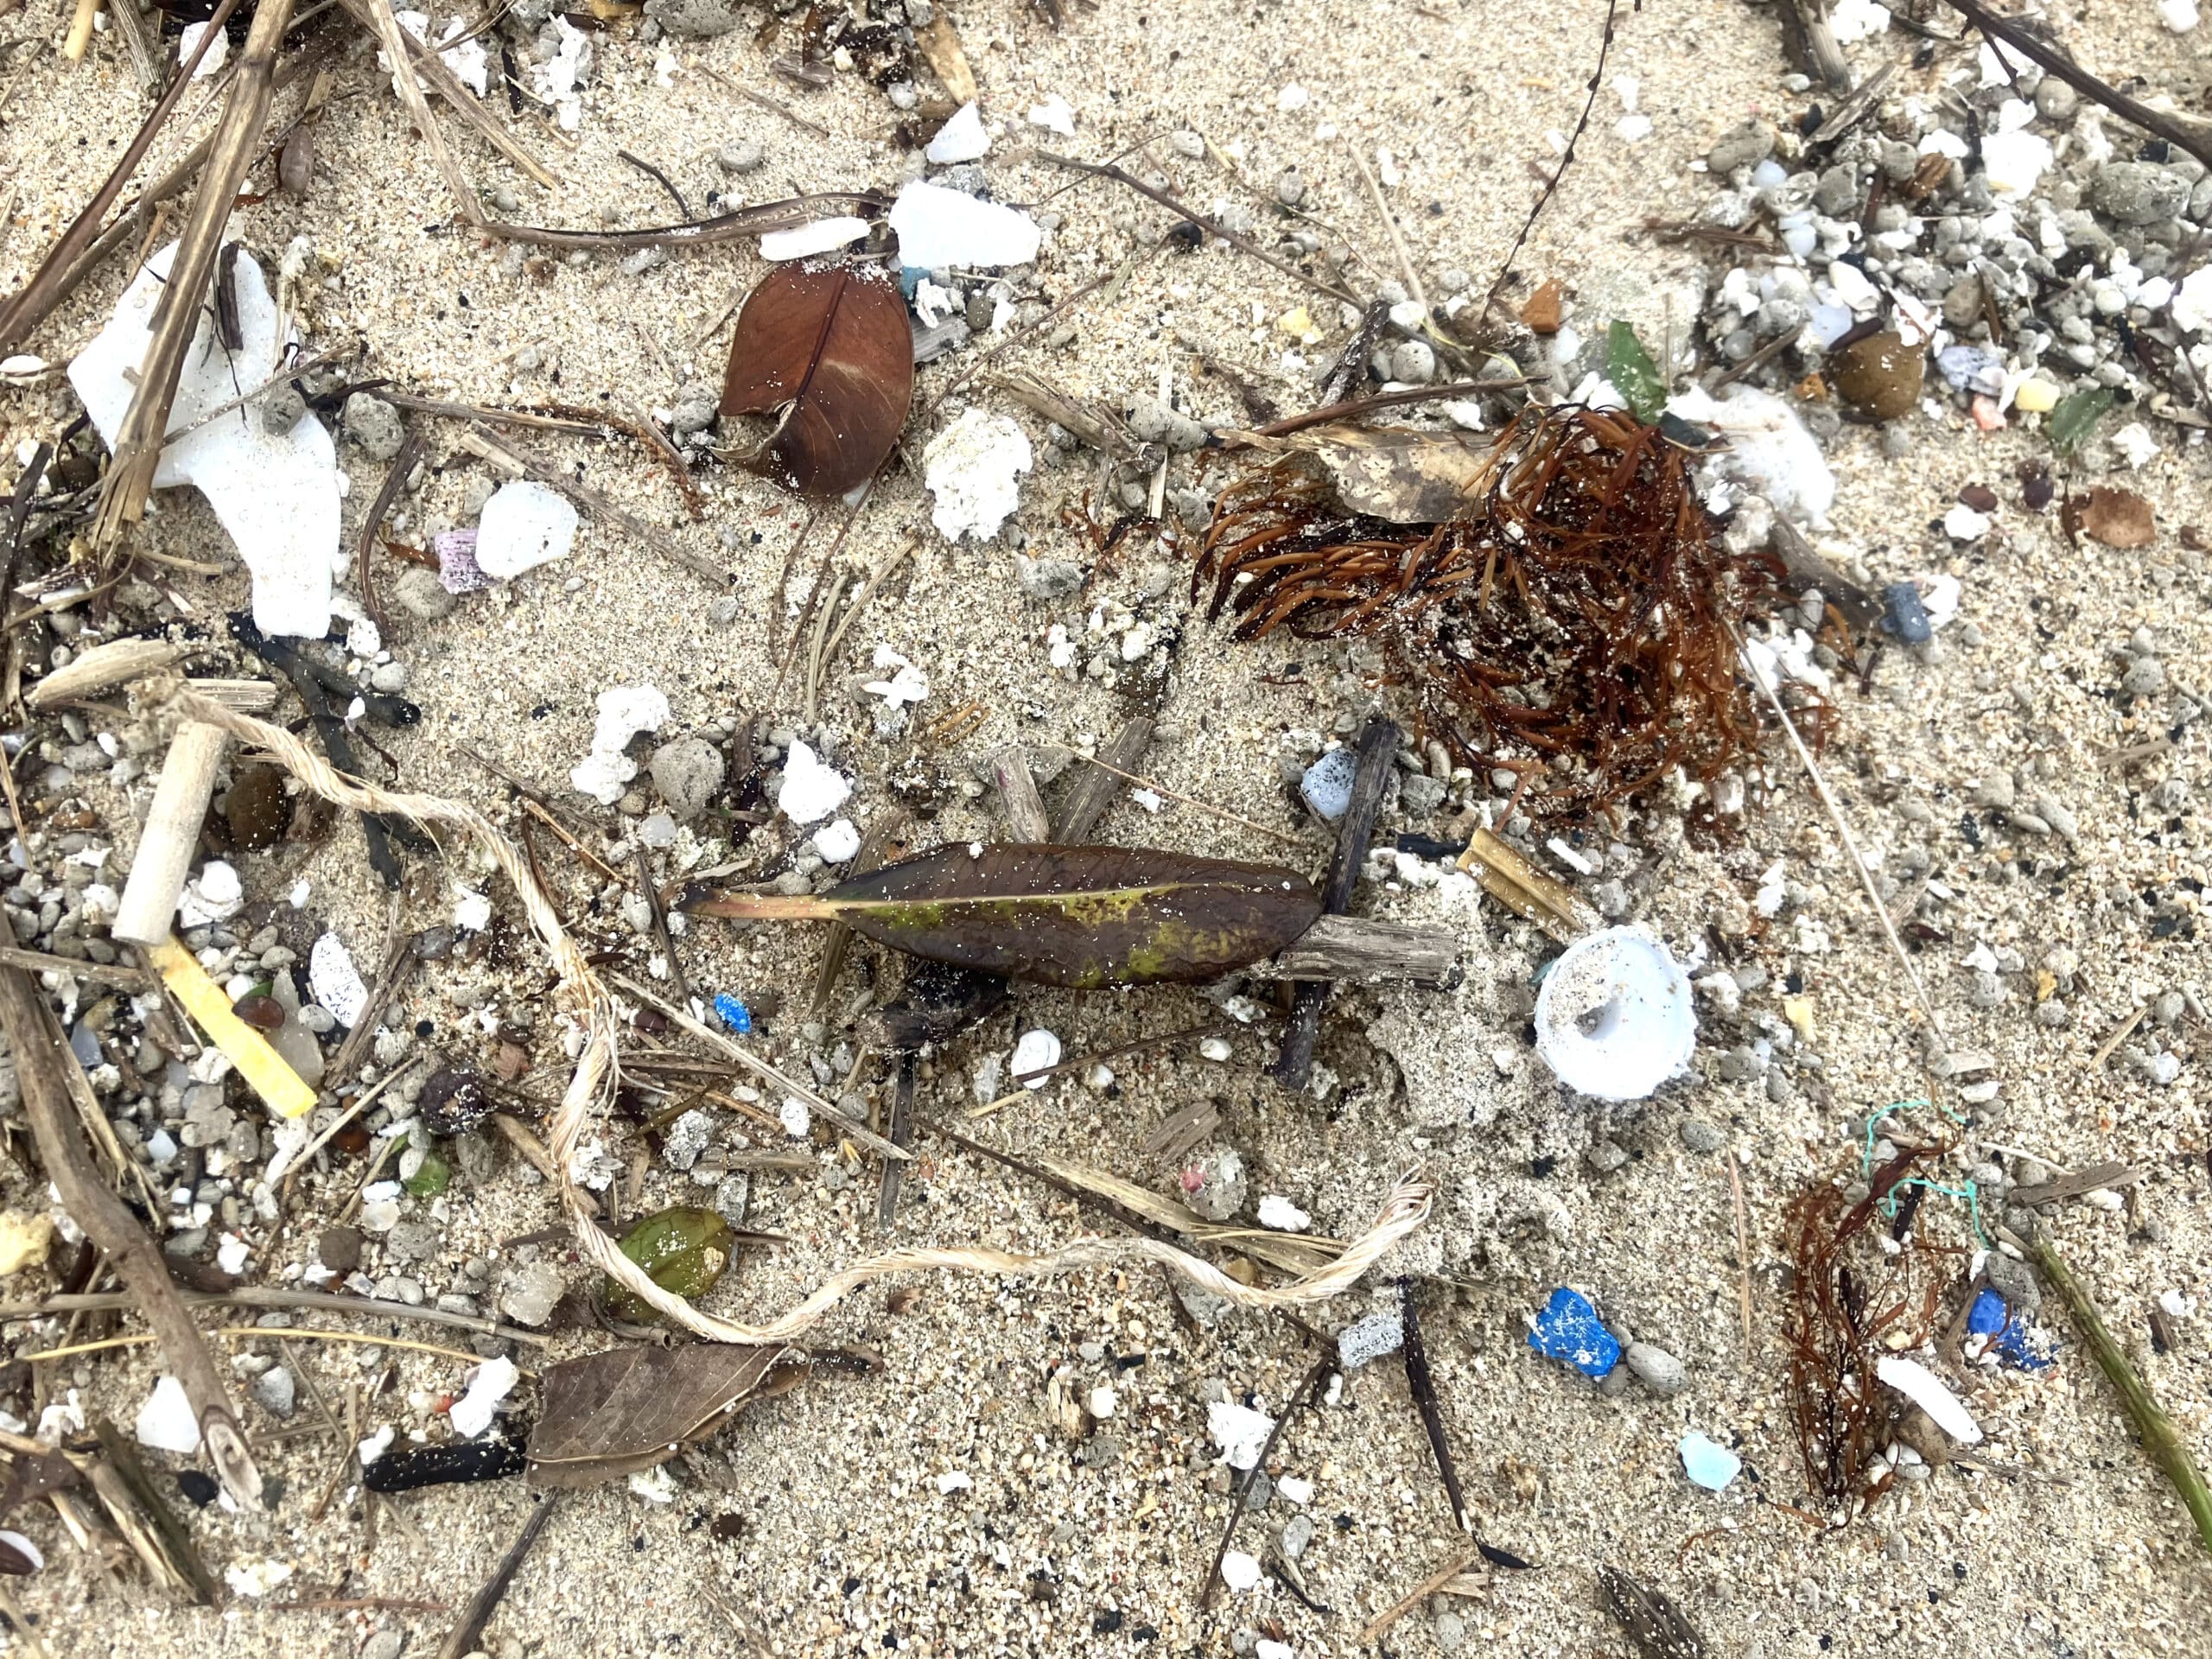 Microplastics scattered along the coastline of Amami Oshima.